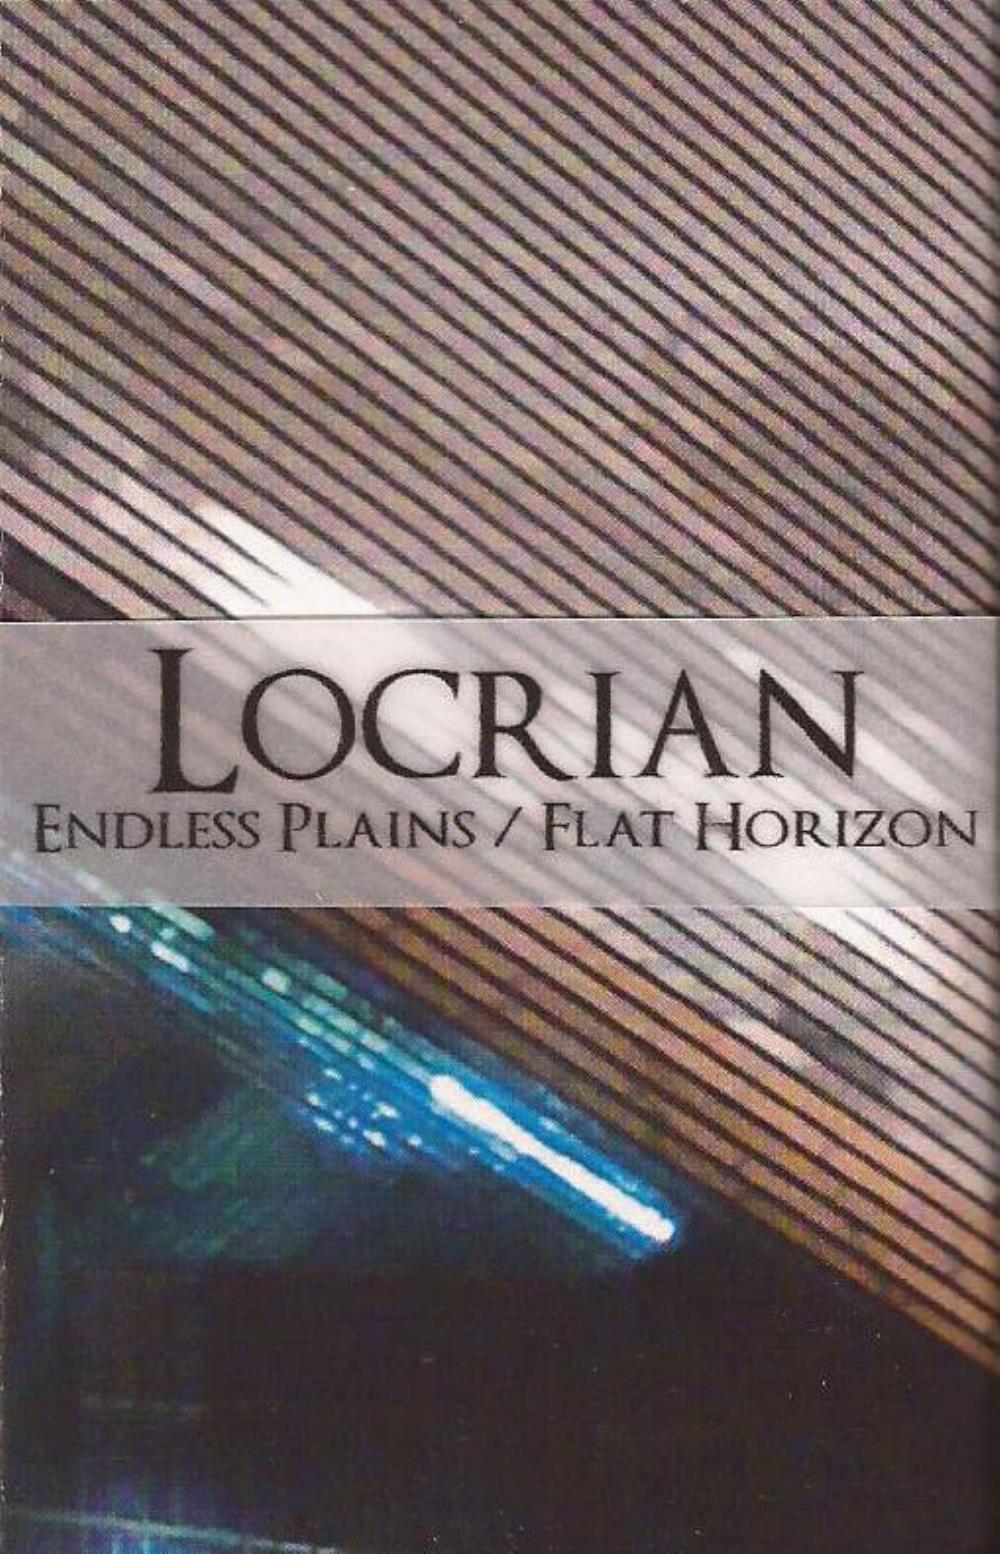 Locrian Endless Plains / Flat Horizon album cover